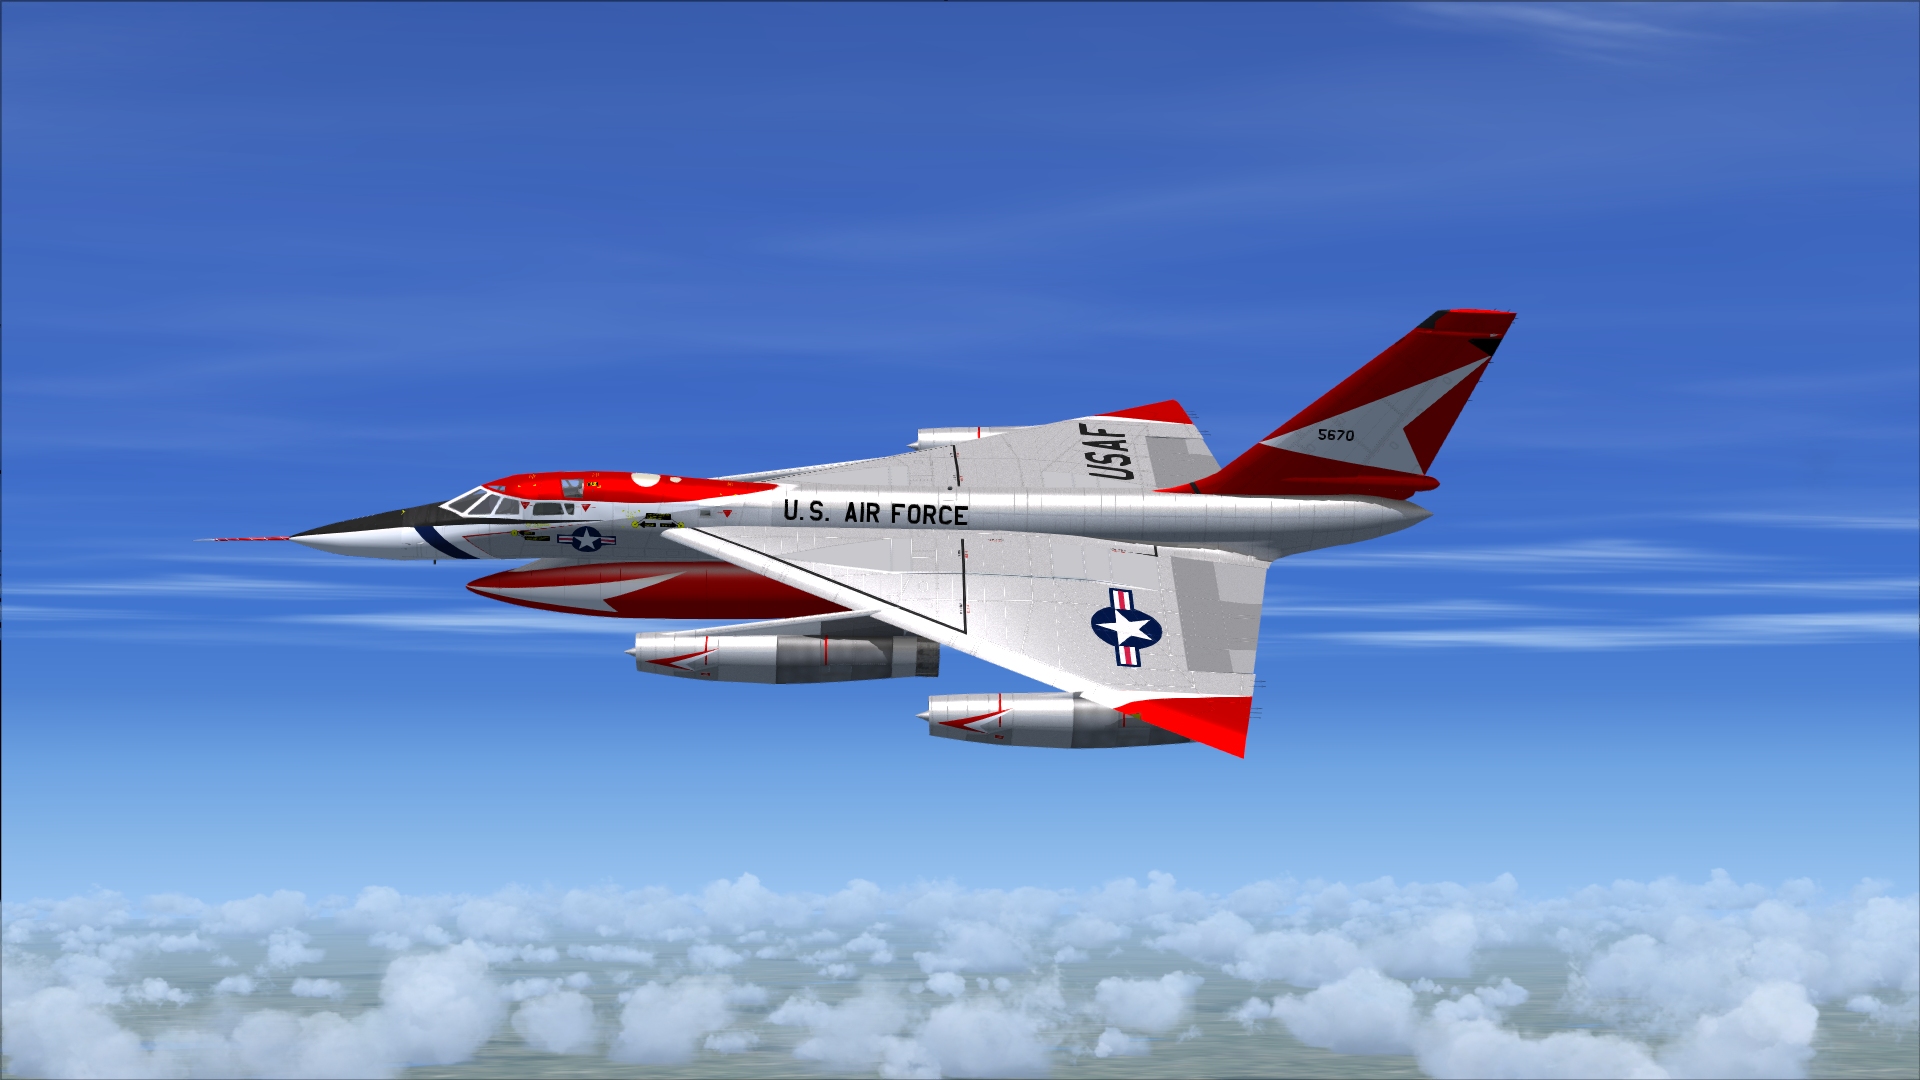 B-58b super hustler